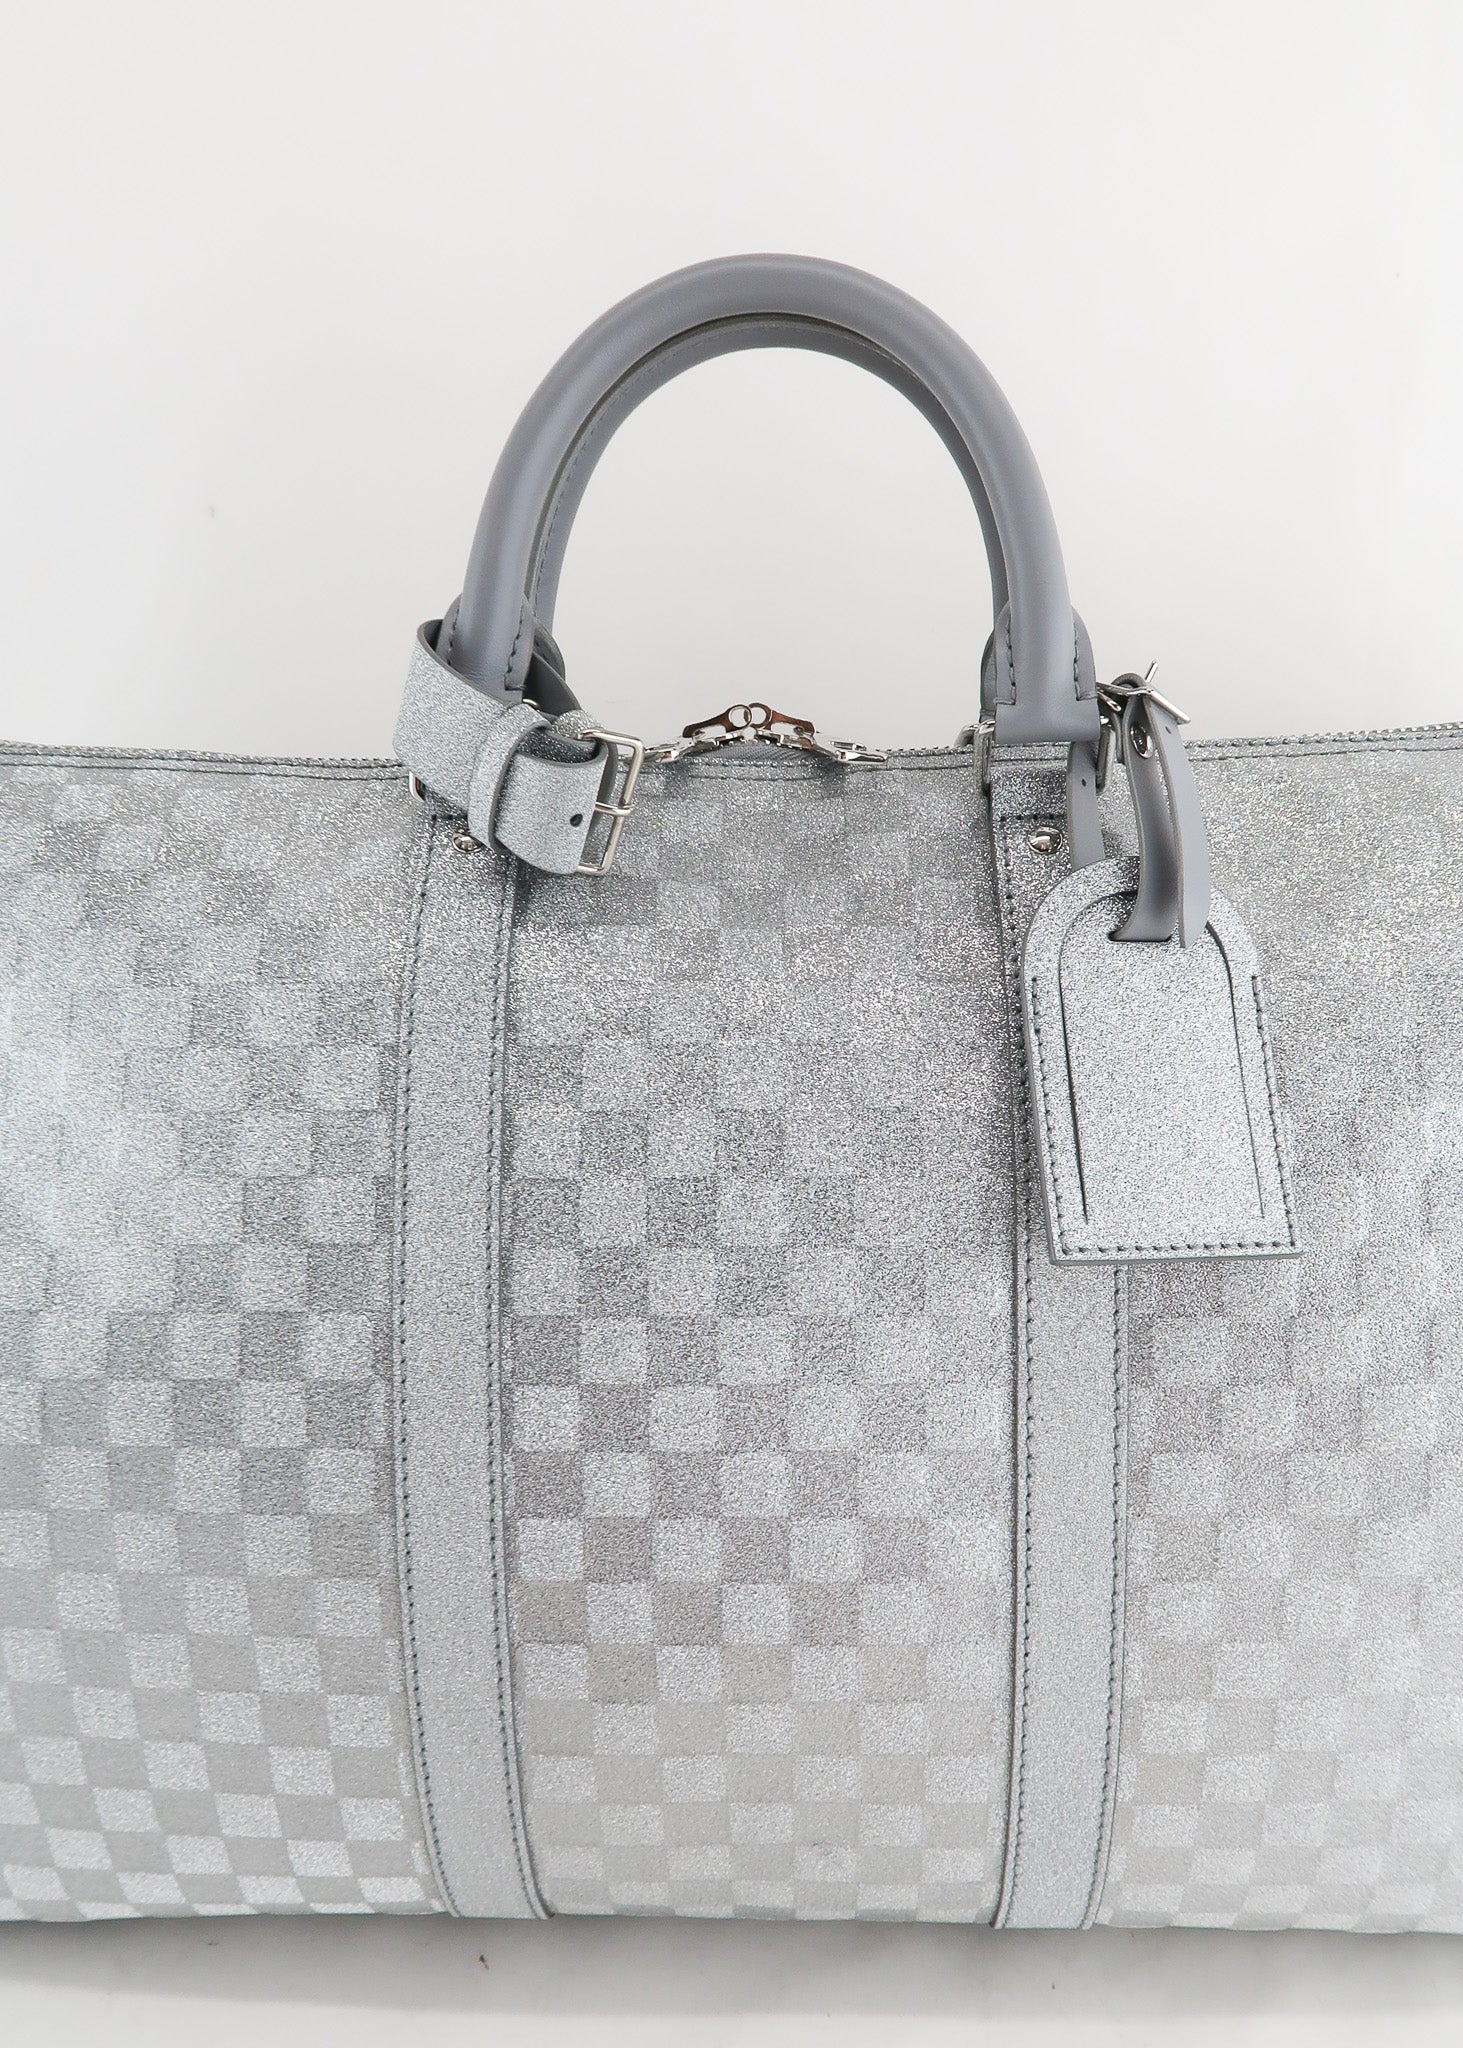 Louis Vuitton Keepall 50, Silver Glitter, New in Dustbag WA001